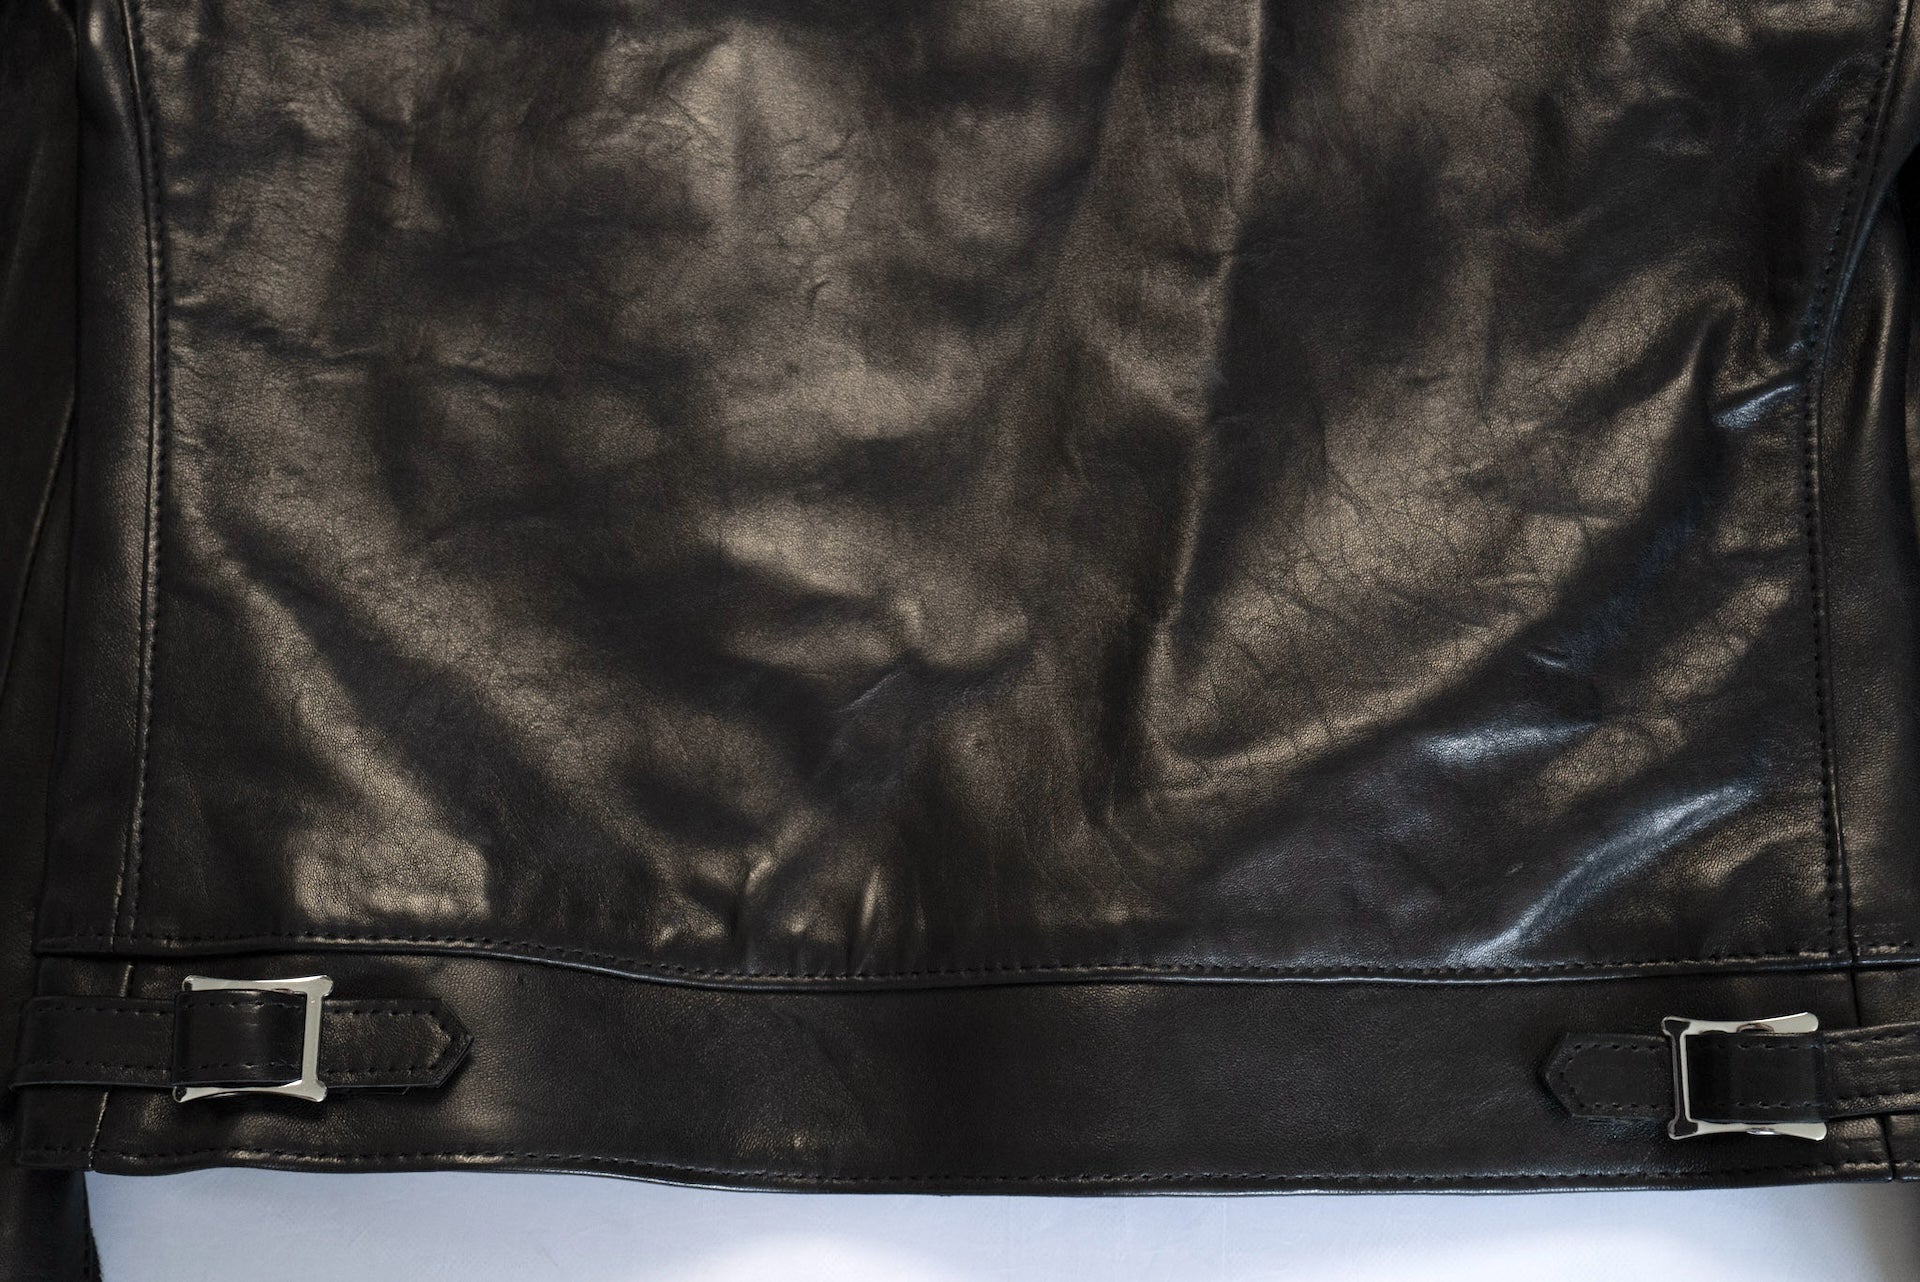 Lewis Leathers Black Sheepskin 'Dominator' 551T Leather Jacket (Tight fit)